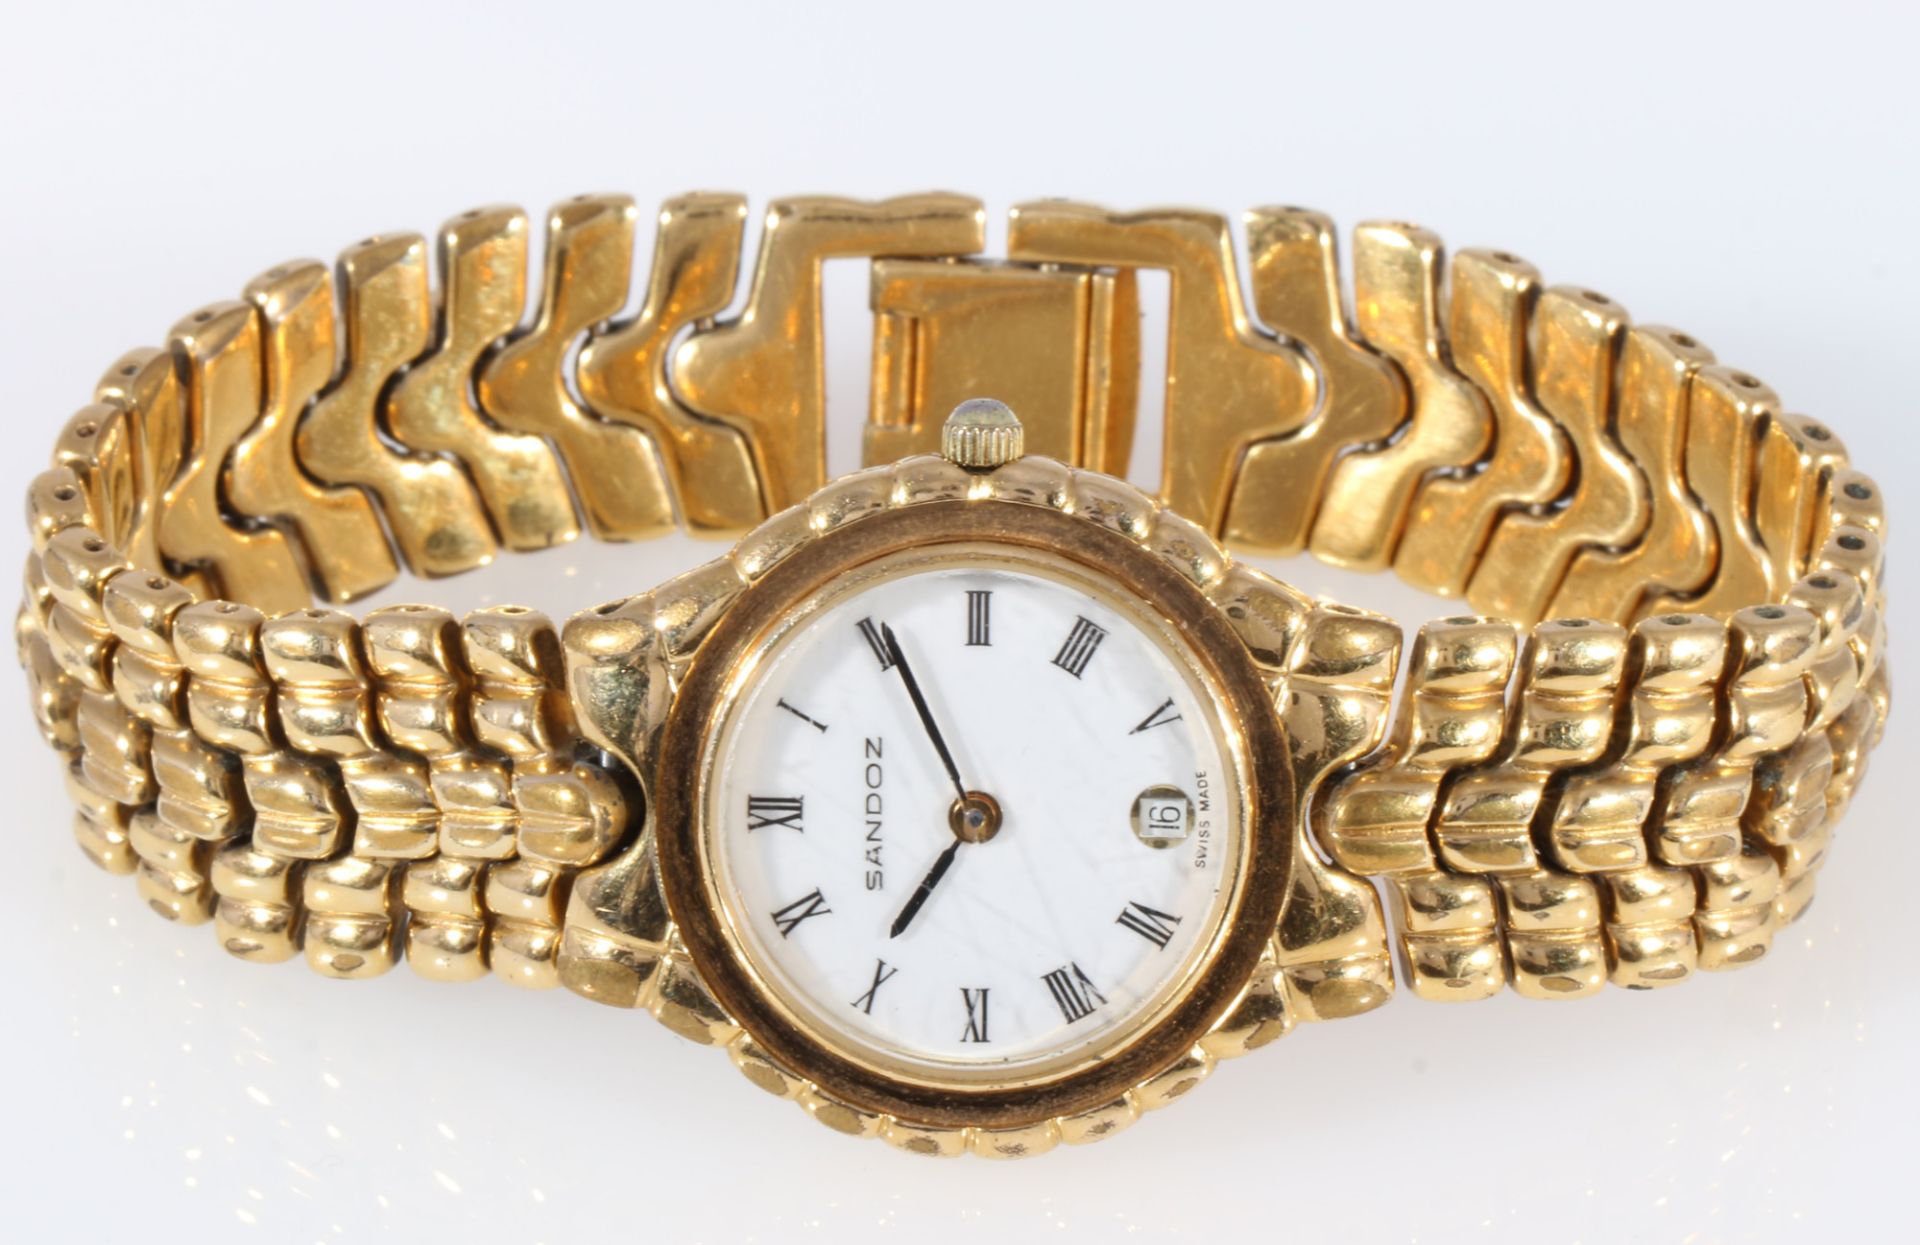 Sandoz Damen Armbanduhr, women's wrist watch, - Image 3 of 4